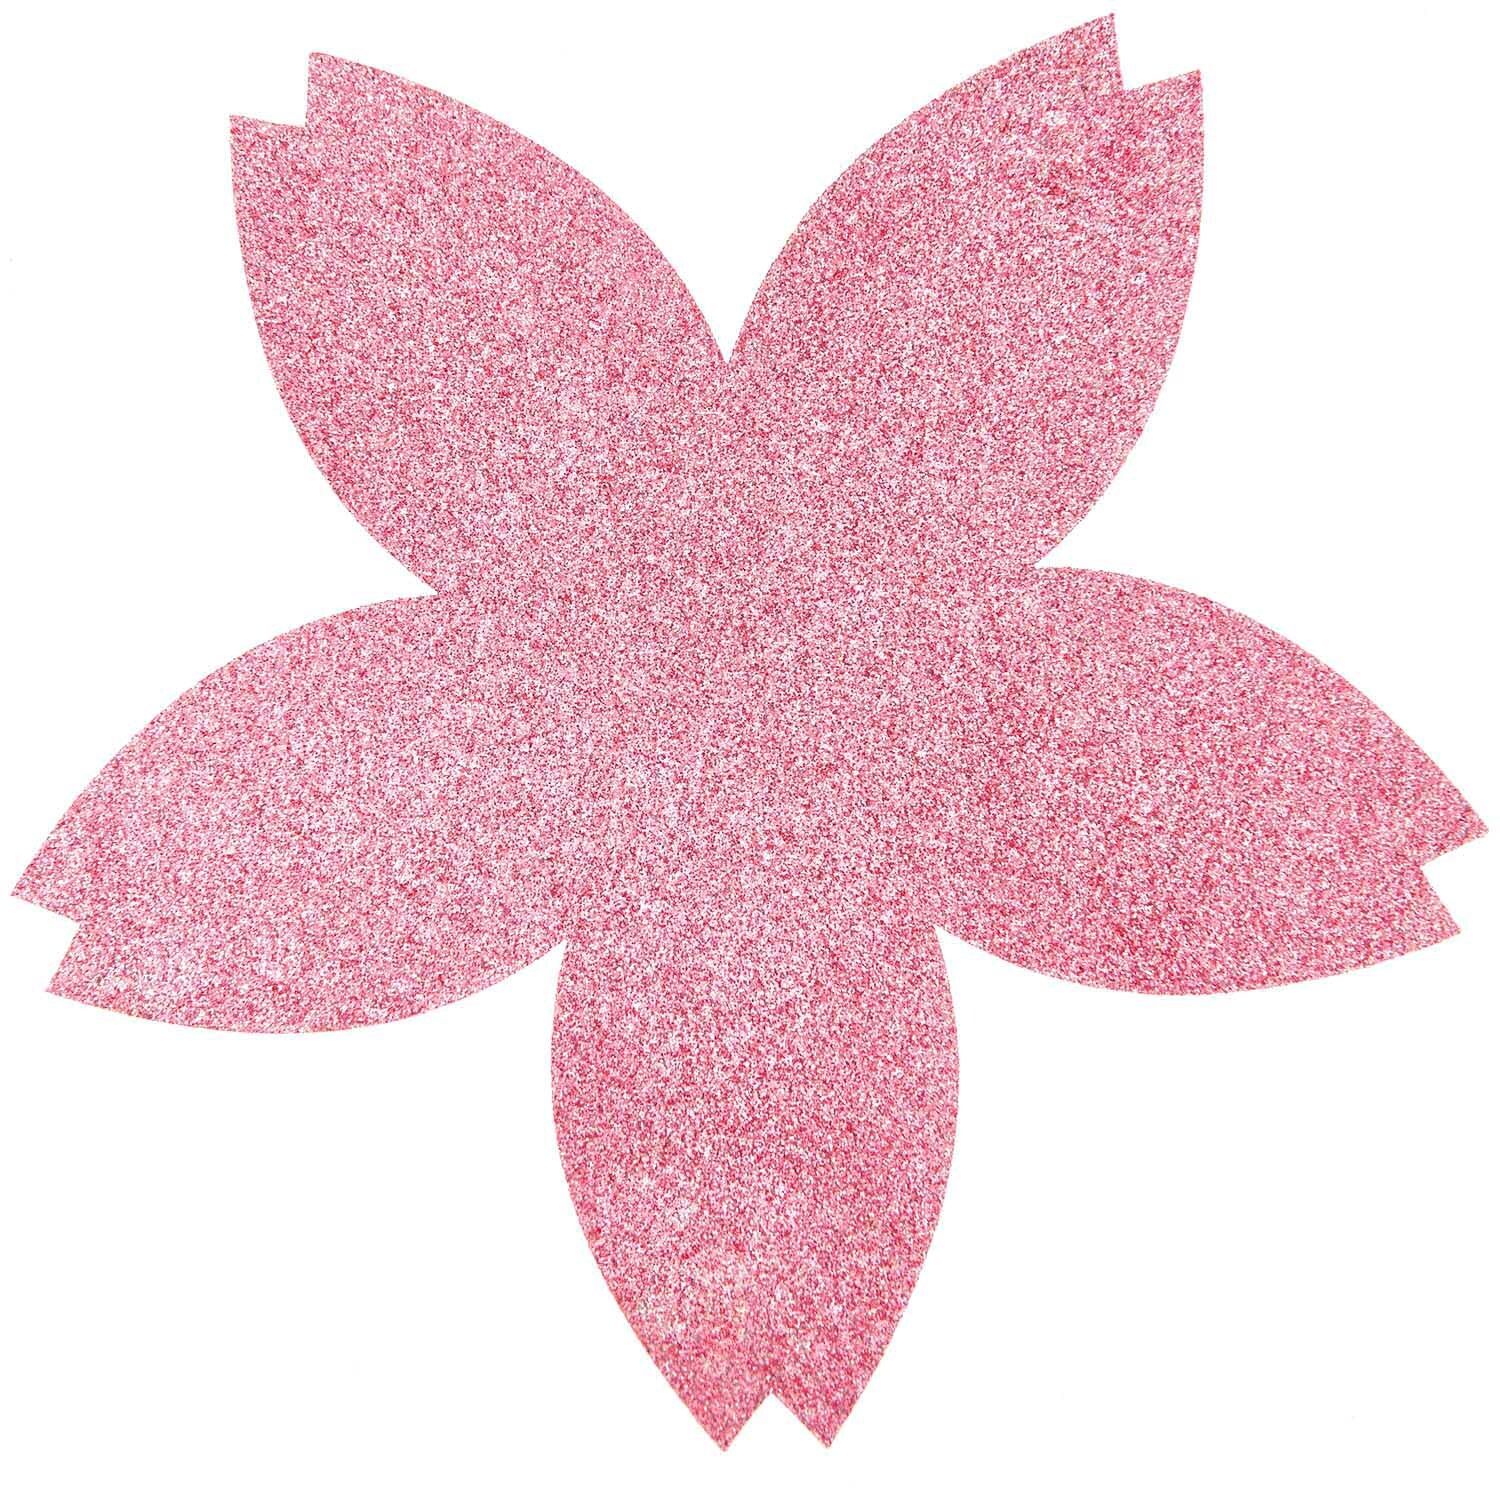 Filz Untersetzer Kirschblüten pink Glitzer 19x19cm 6 Stück